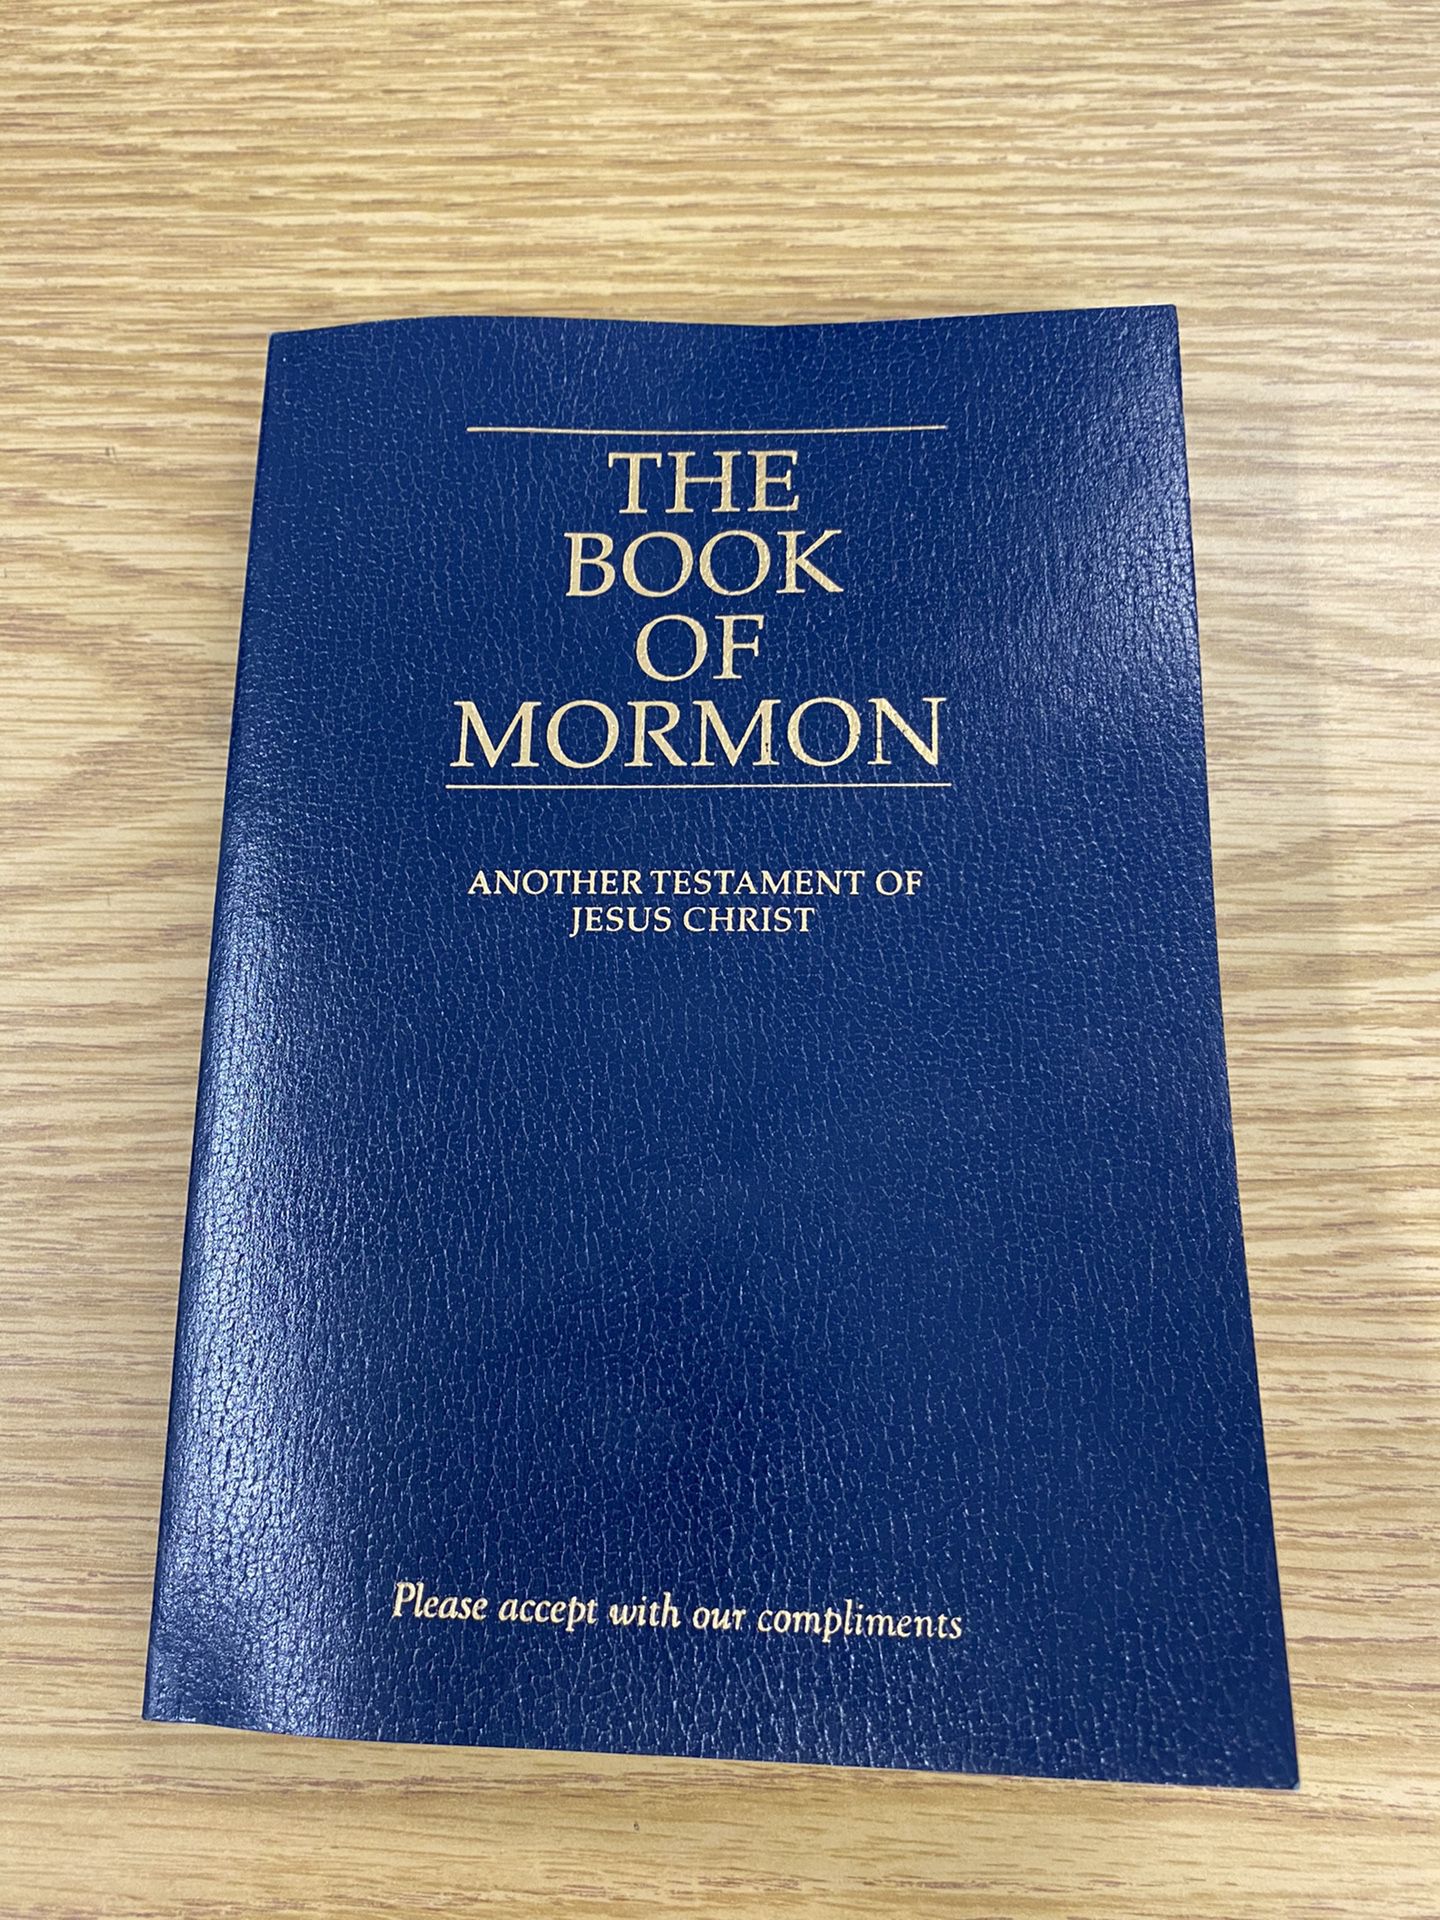 FREE Books of Mormon